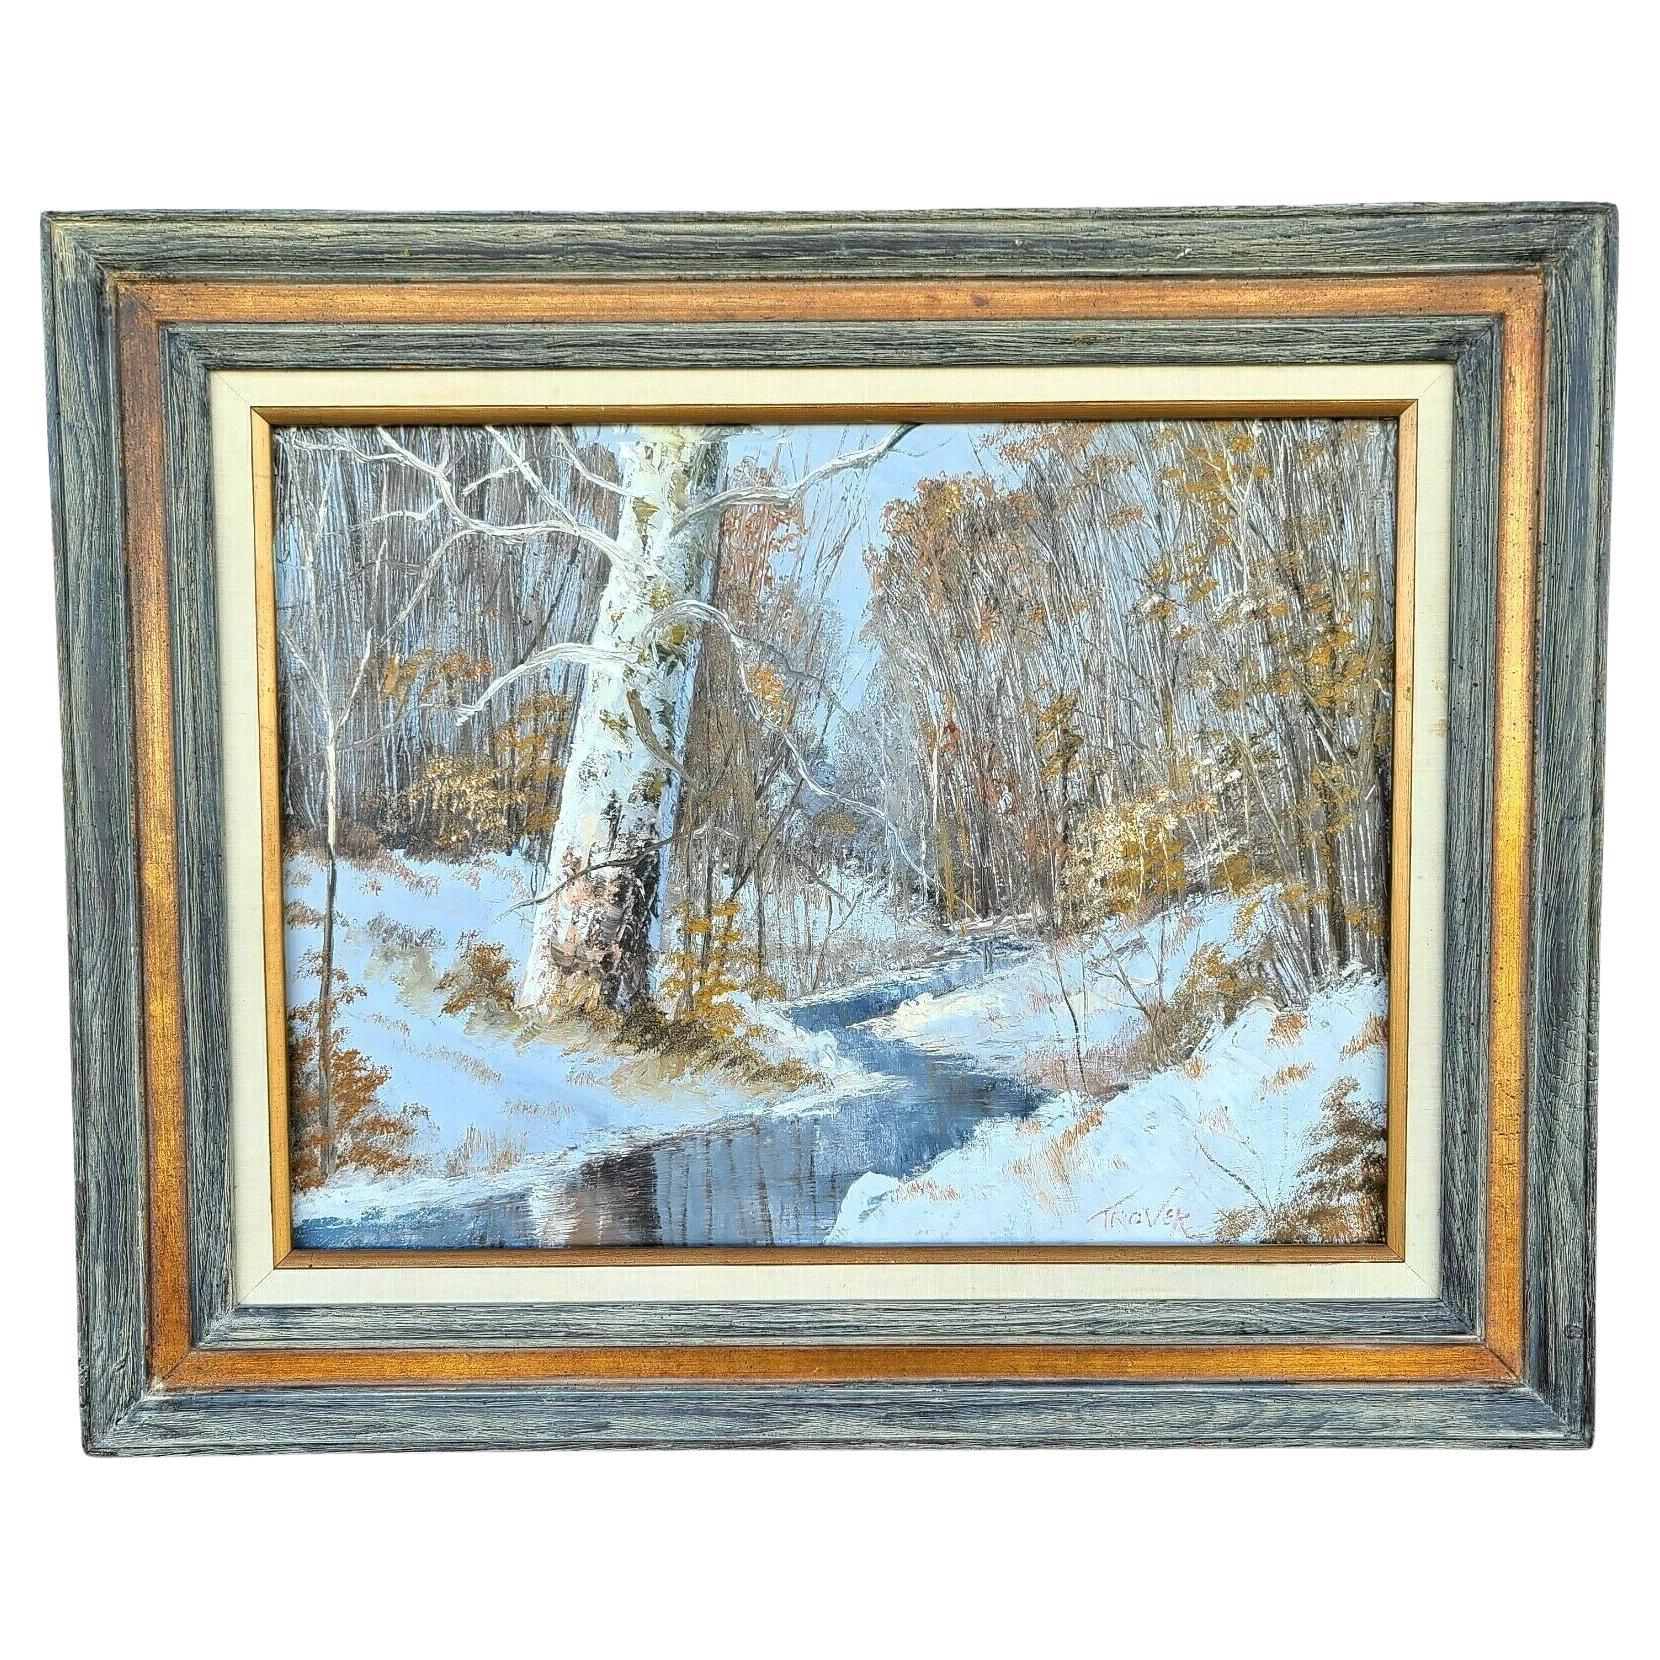 Original Signed Joseph Trover Oil Painting of Winter Landscape For Sale